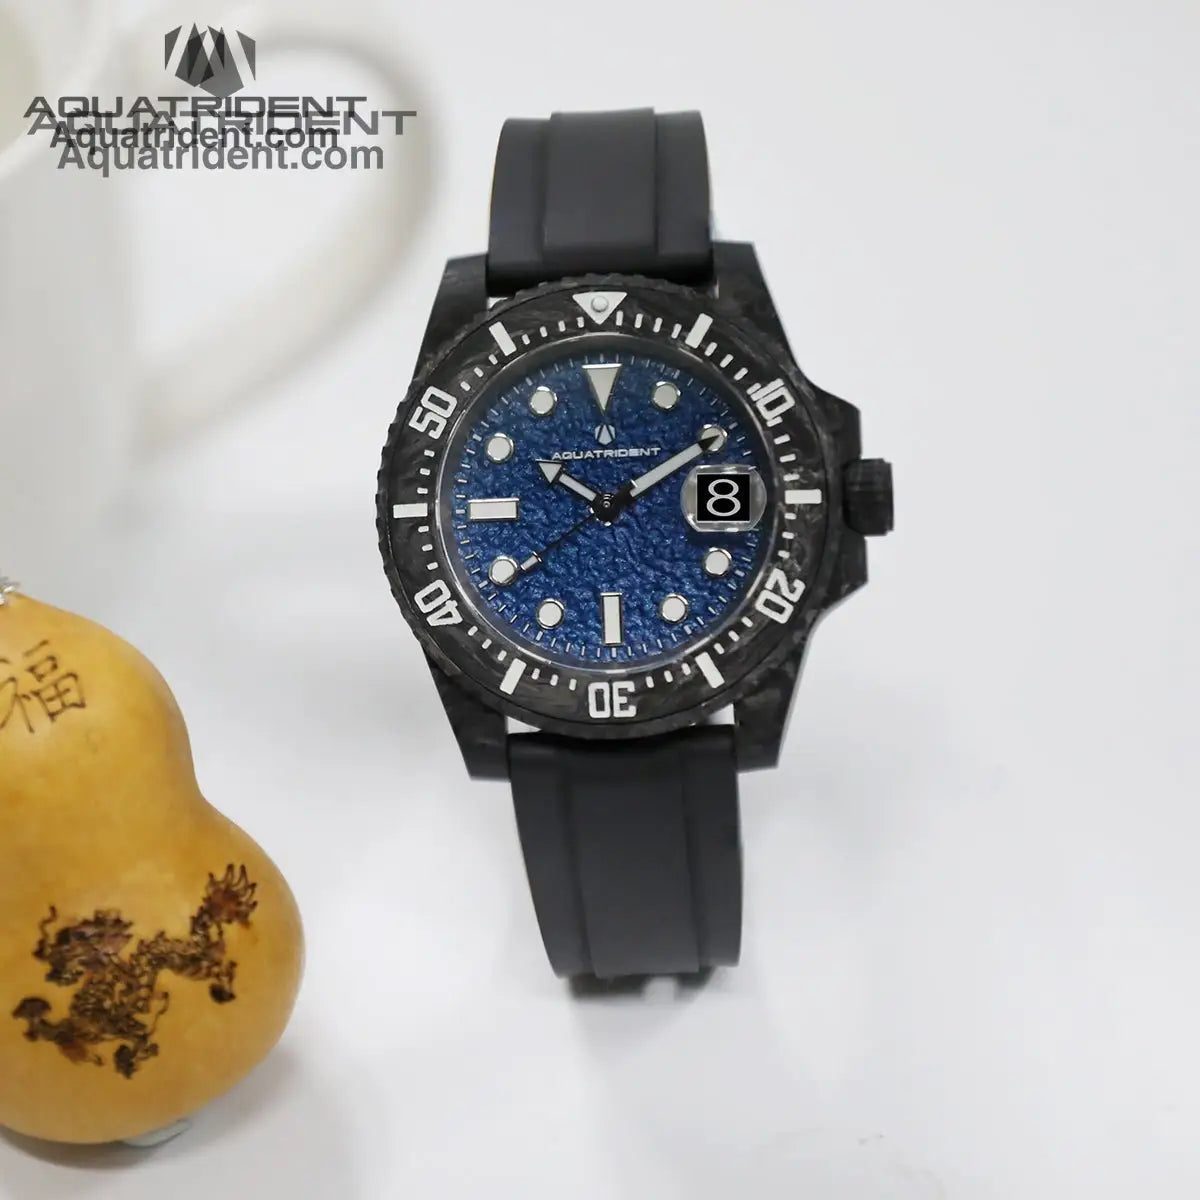 black carbon fiber case and bezel-Blue rough textured dial with dates-balck fluororubber-watch display